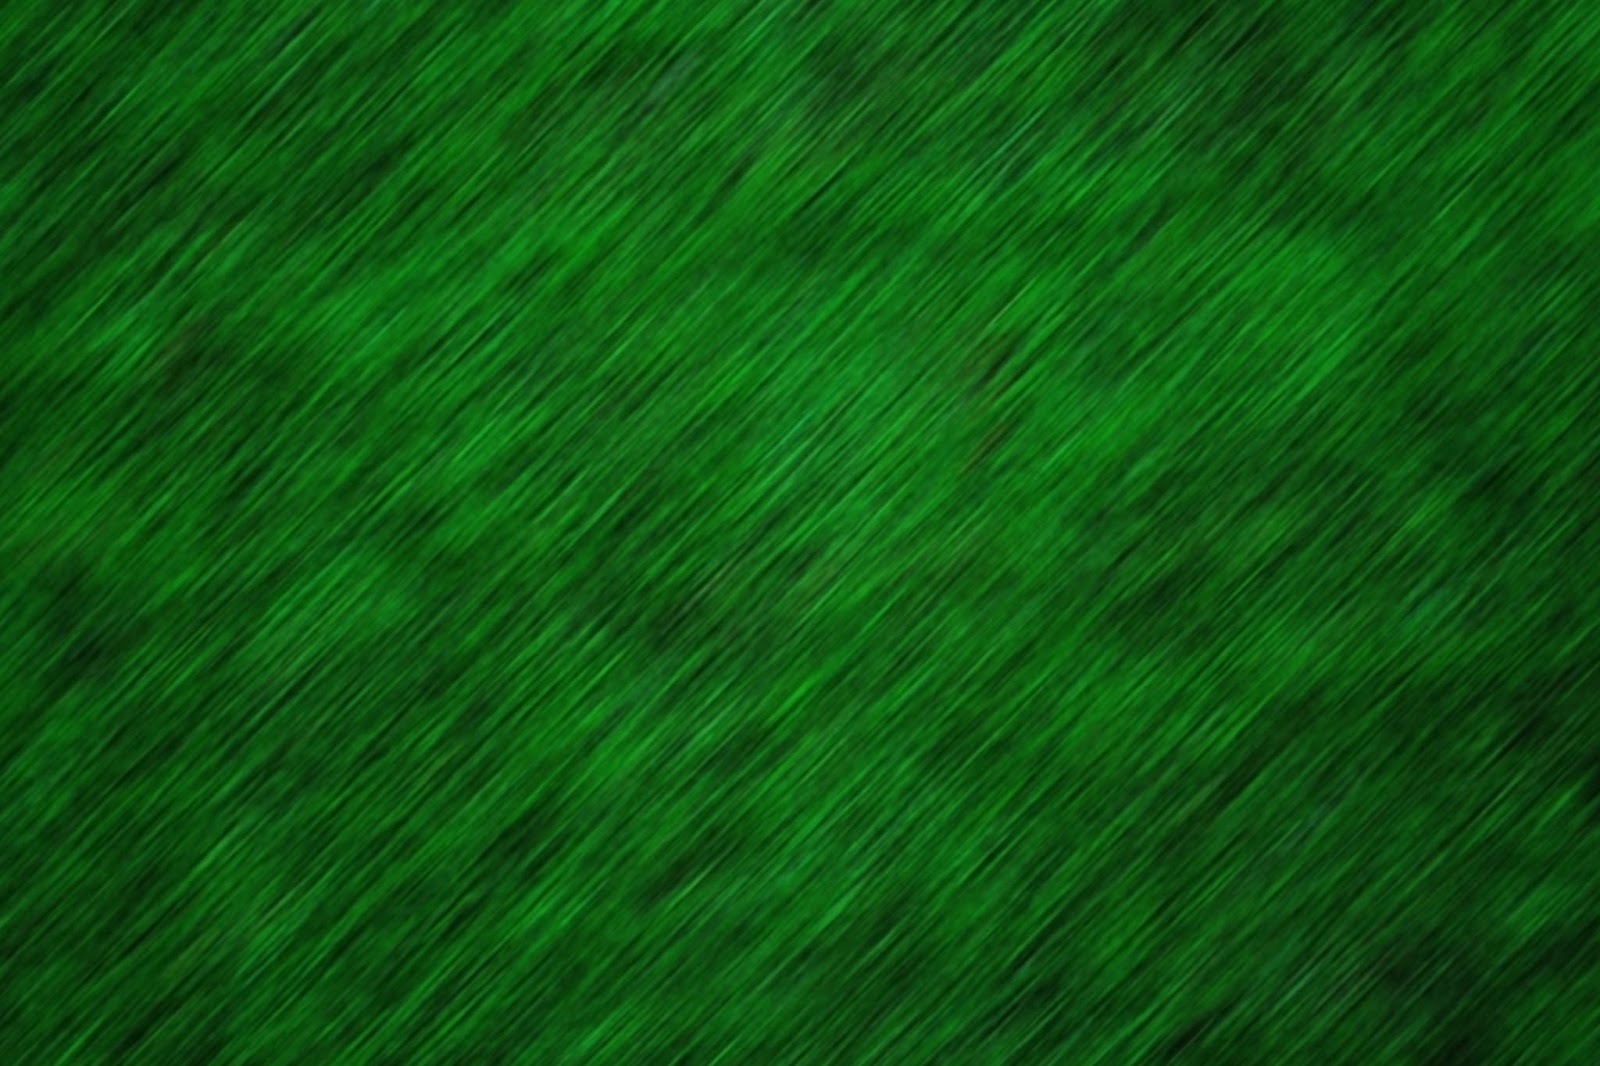 papier peint hijau,vert,herbe,feuille,famille d'herbe,gazon artificiel